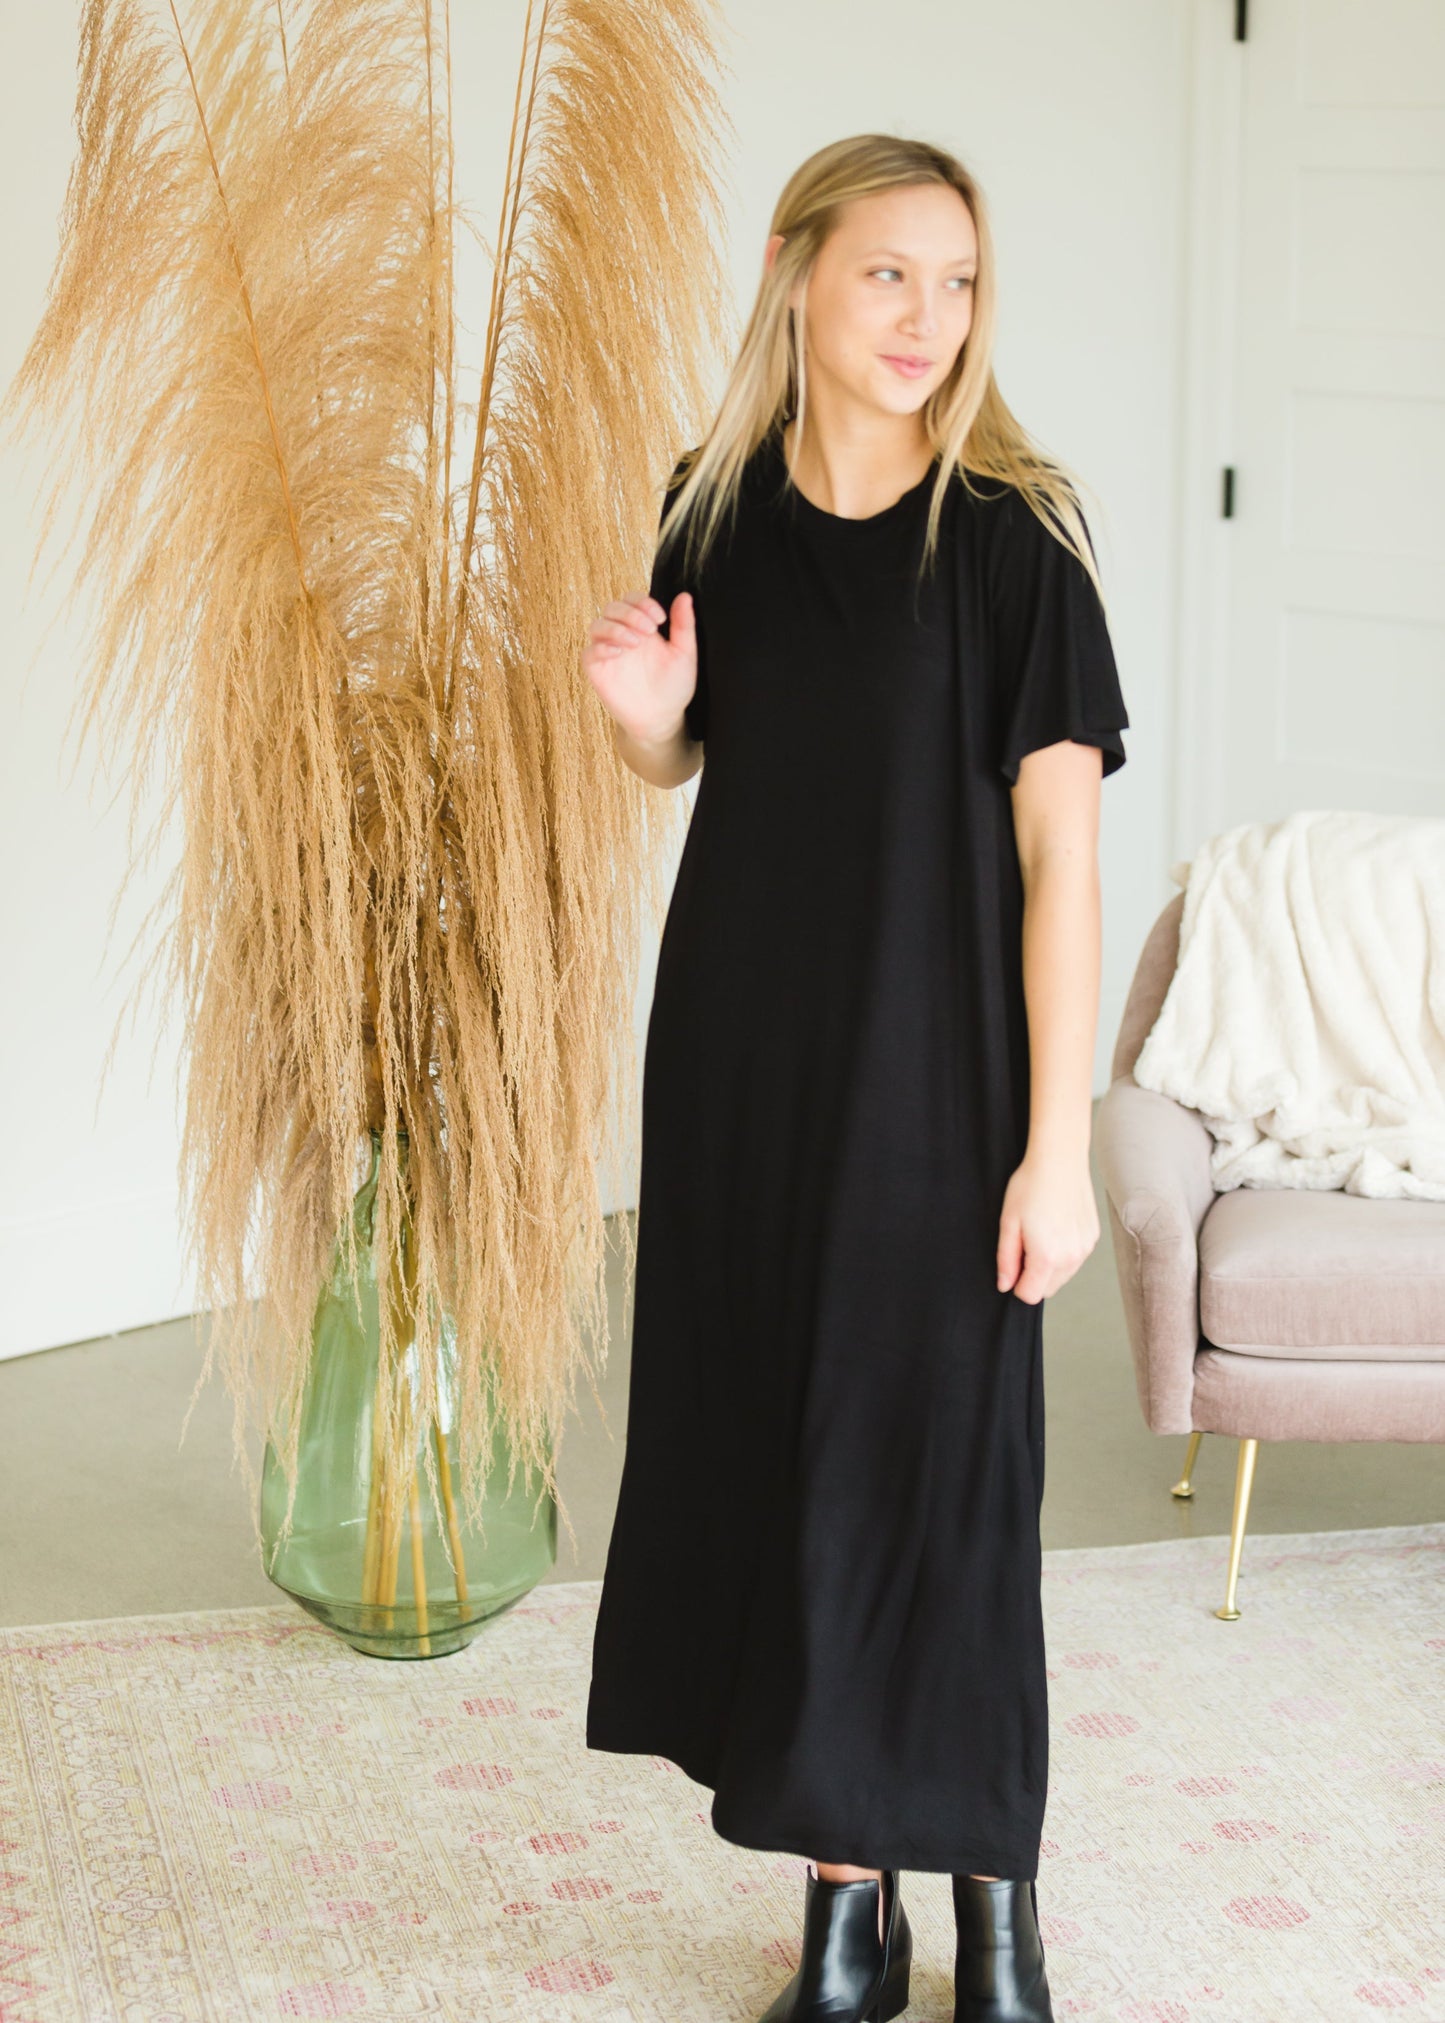 Black Bell Sleeve Maxi Dress - FINAL SALE Dresses